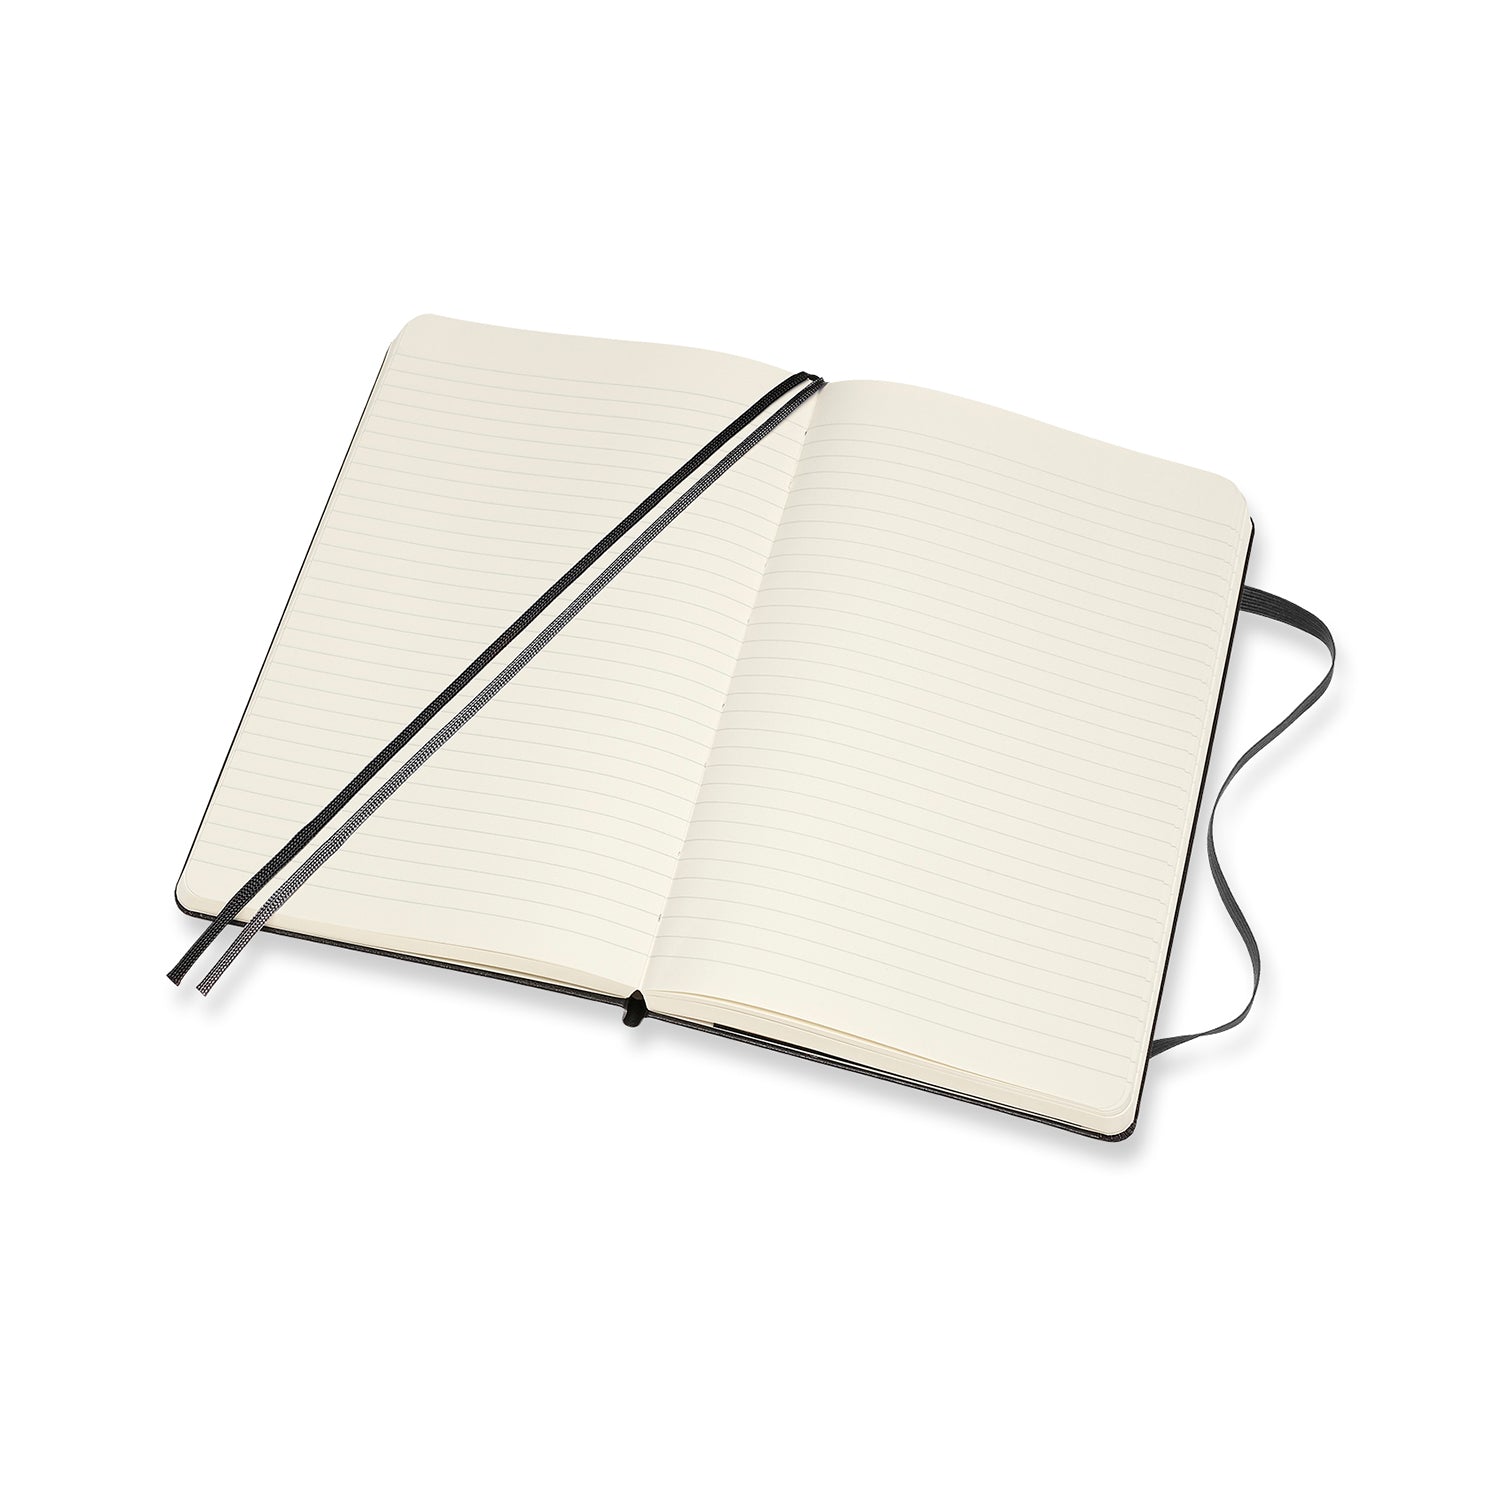 Moleskine Classic Notebook - Double Layout Black Large Hard Cover